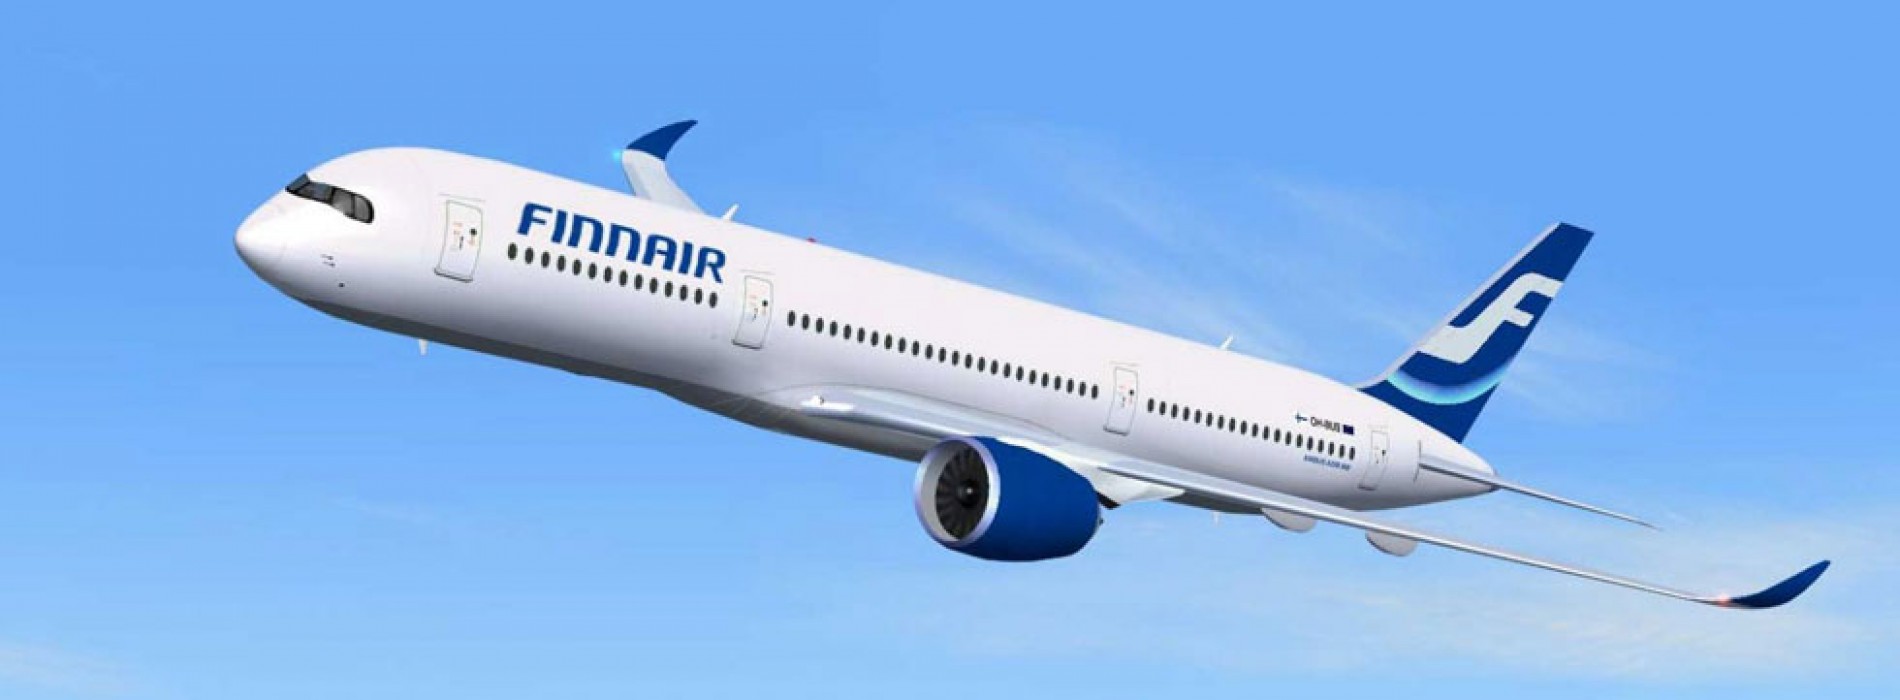 Finnair launches flights from Edinburgh to Helsinki